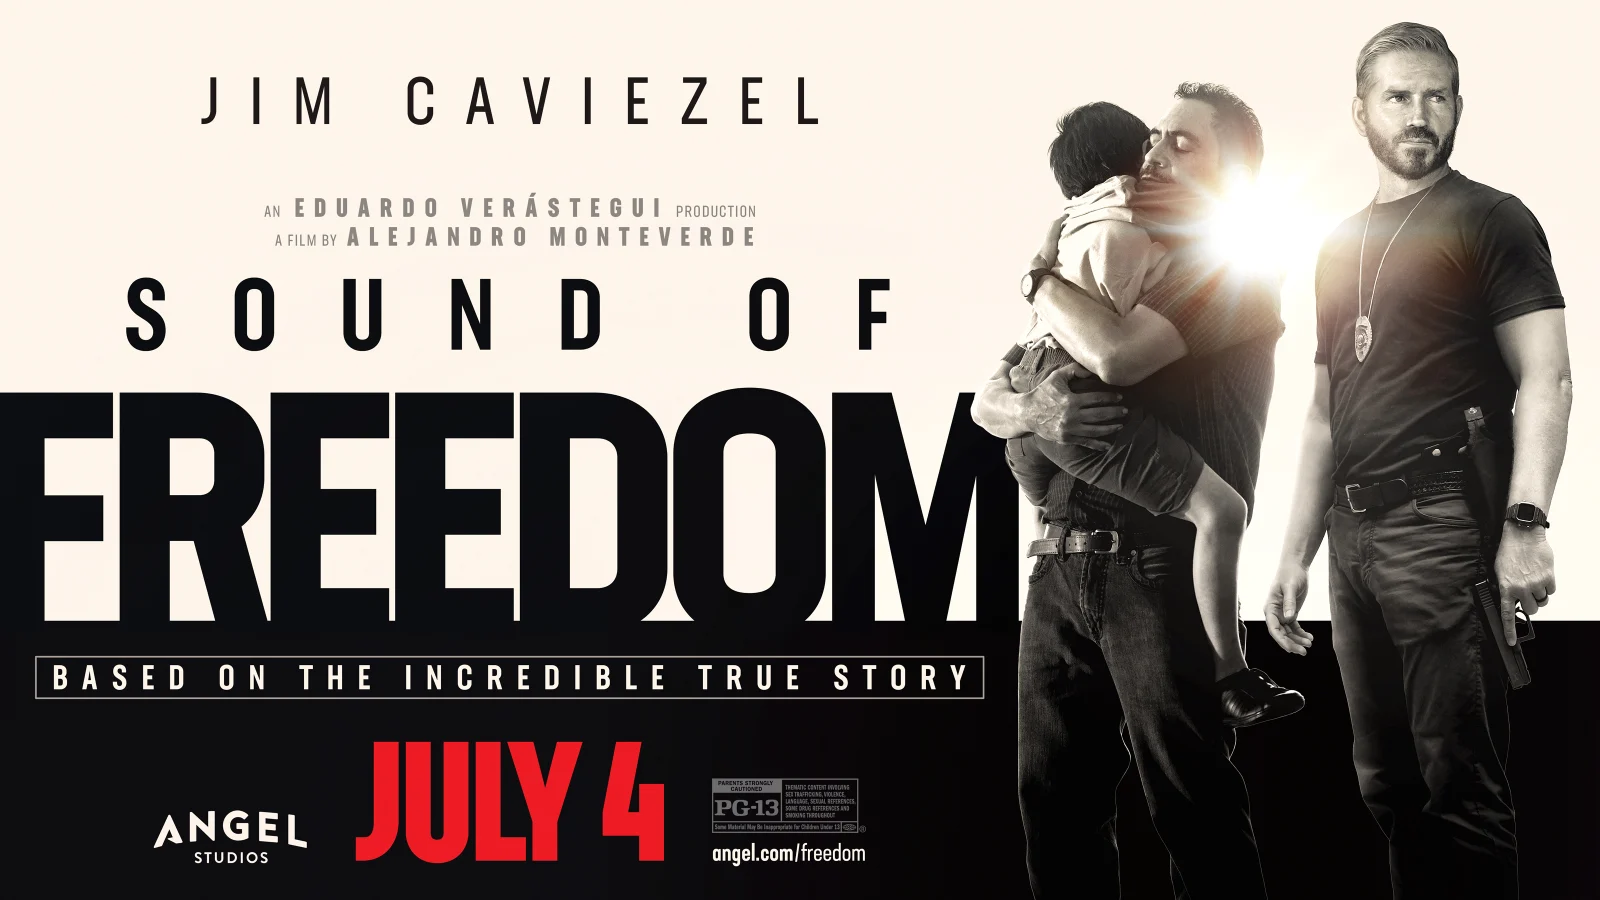 Angel Studios Announces New Film SOUND OF FREEDOM Starring Jim Caviezel